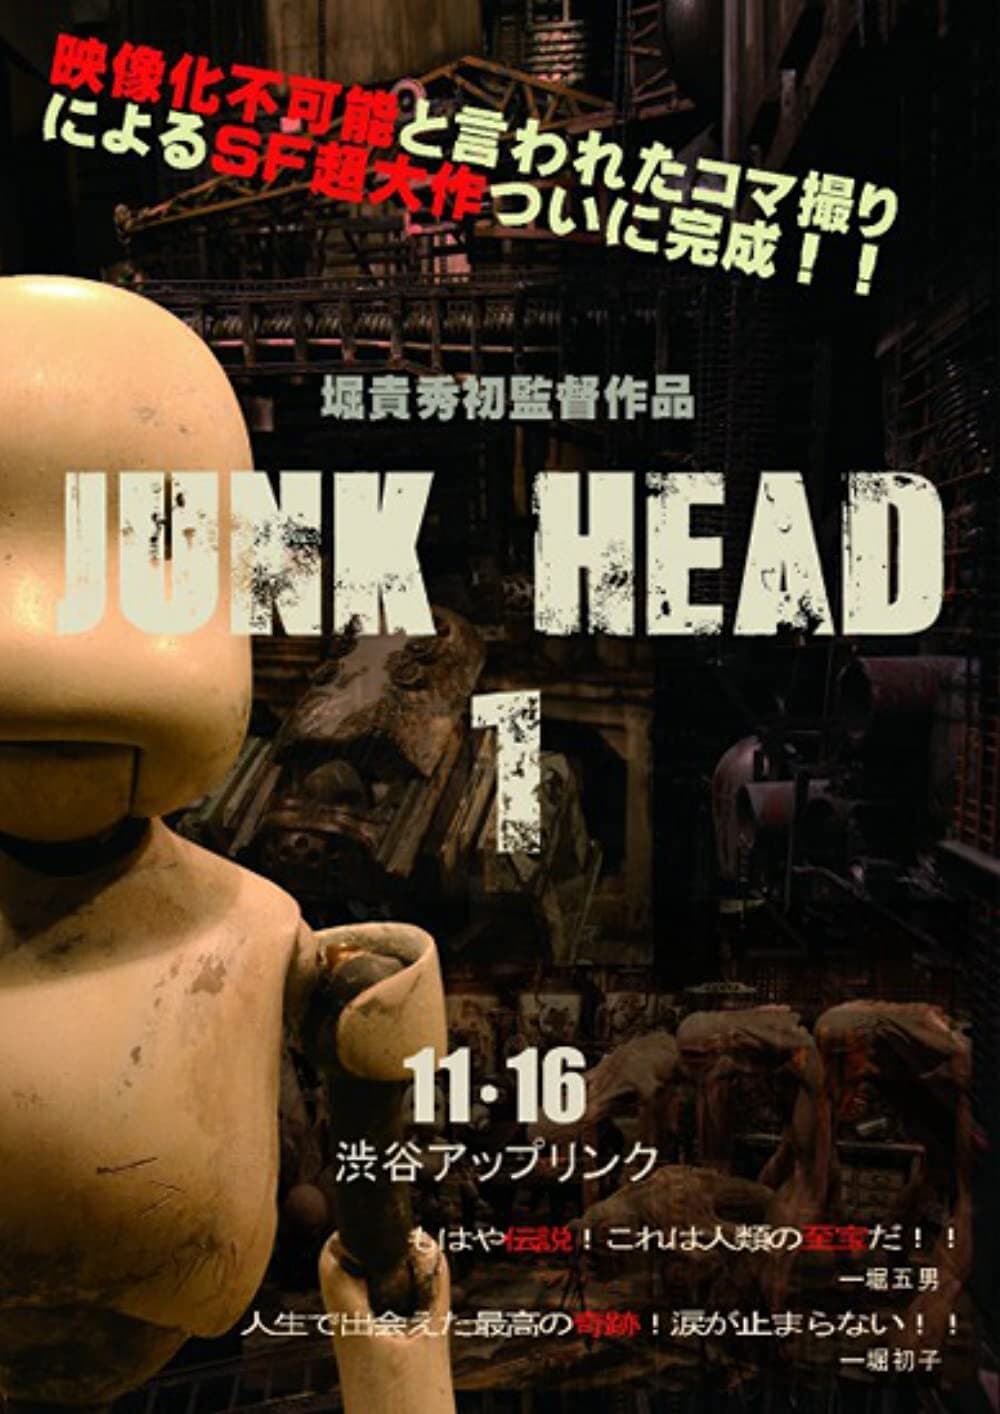 affiche du film Junk Head